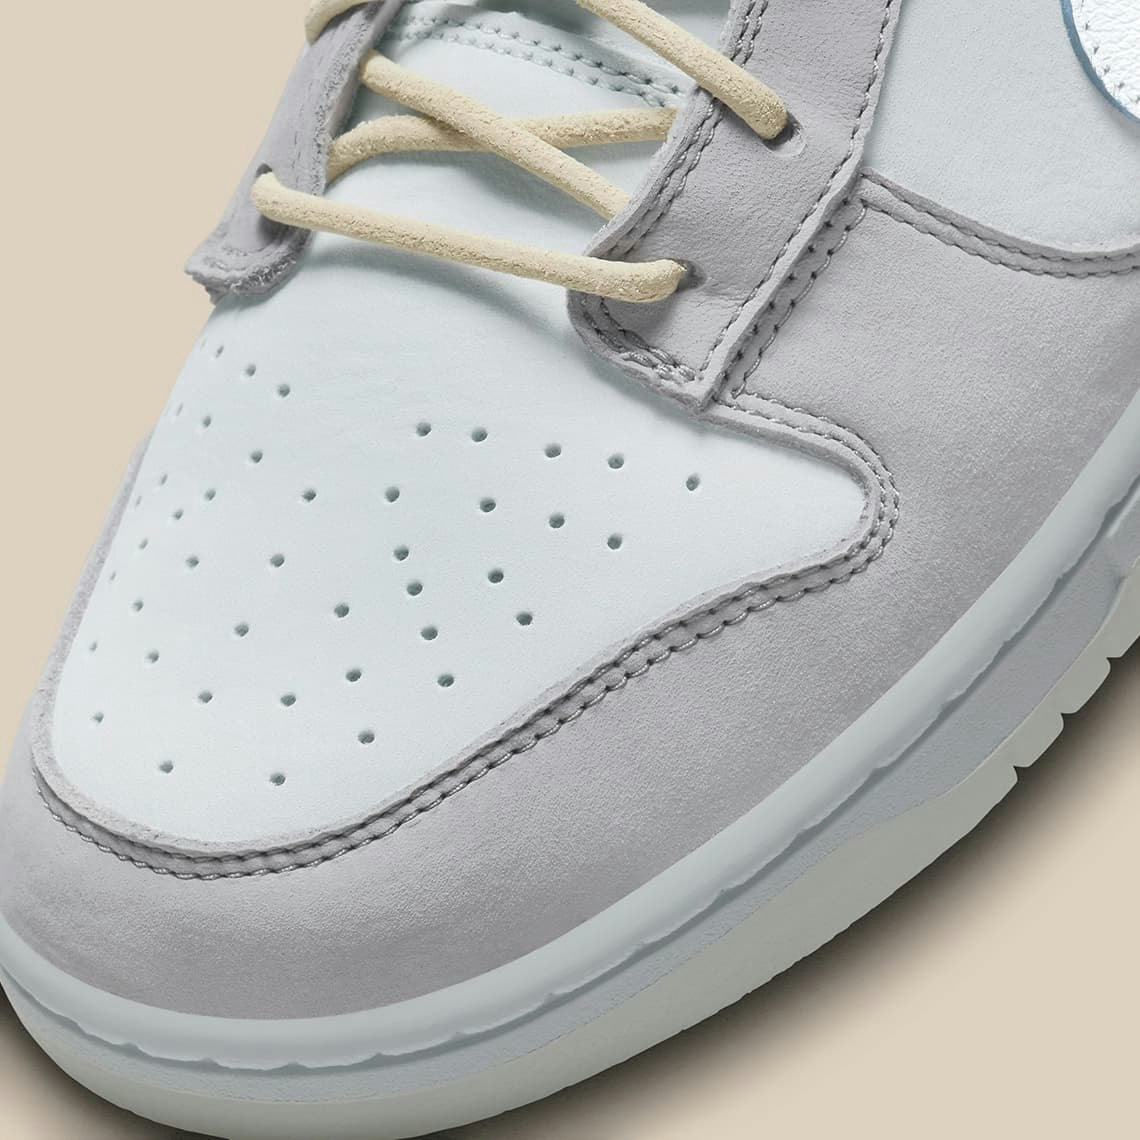 Nike Dunk Low Premium “Grey Leather”